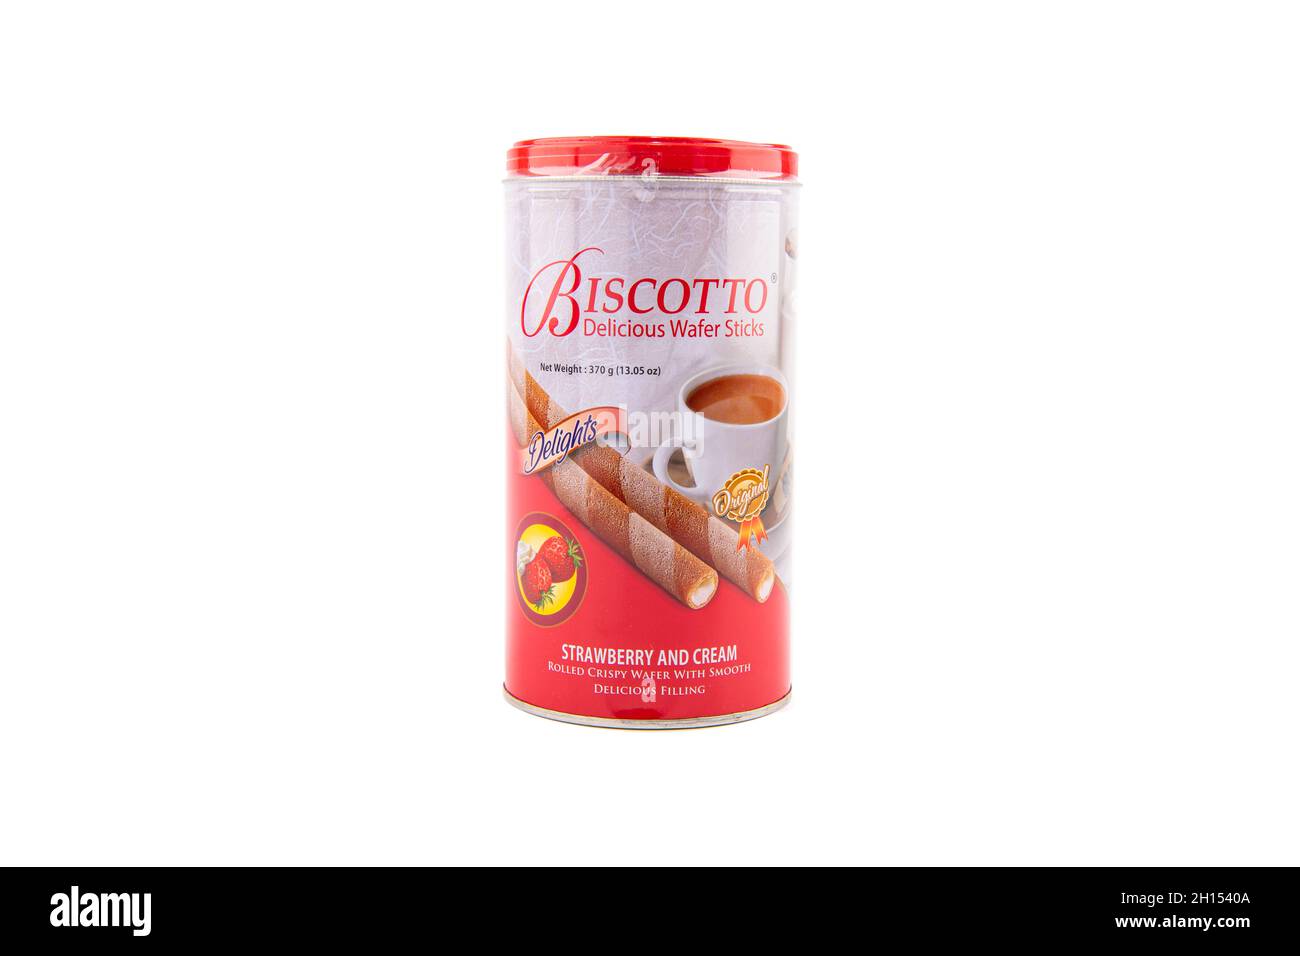 Biscotto Delicious Wafer Sticks fresa y crema 370gm Tin sobre fondo blanco Foto de stock